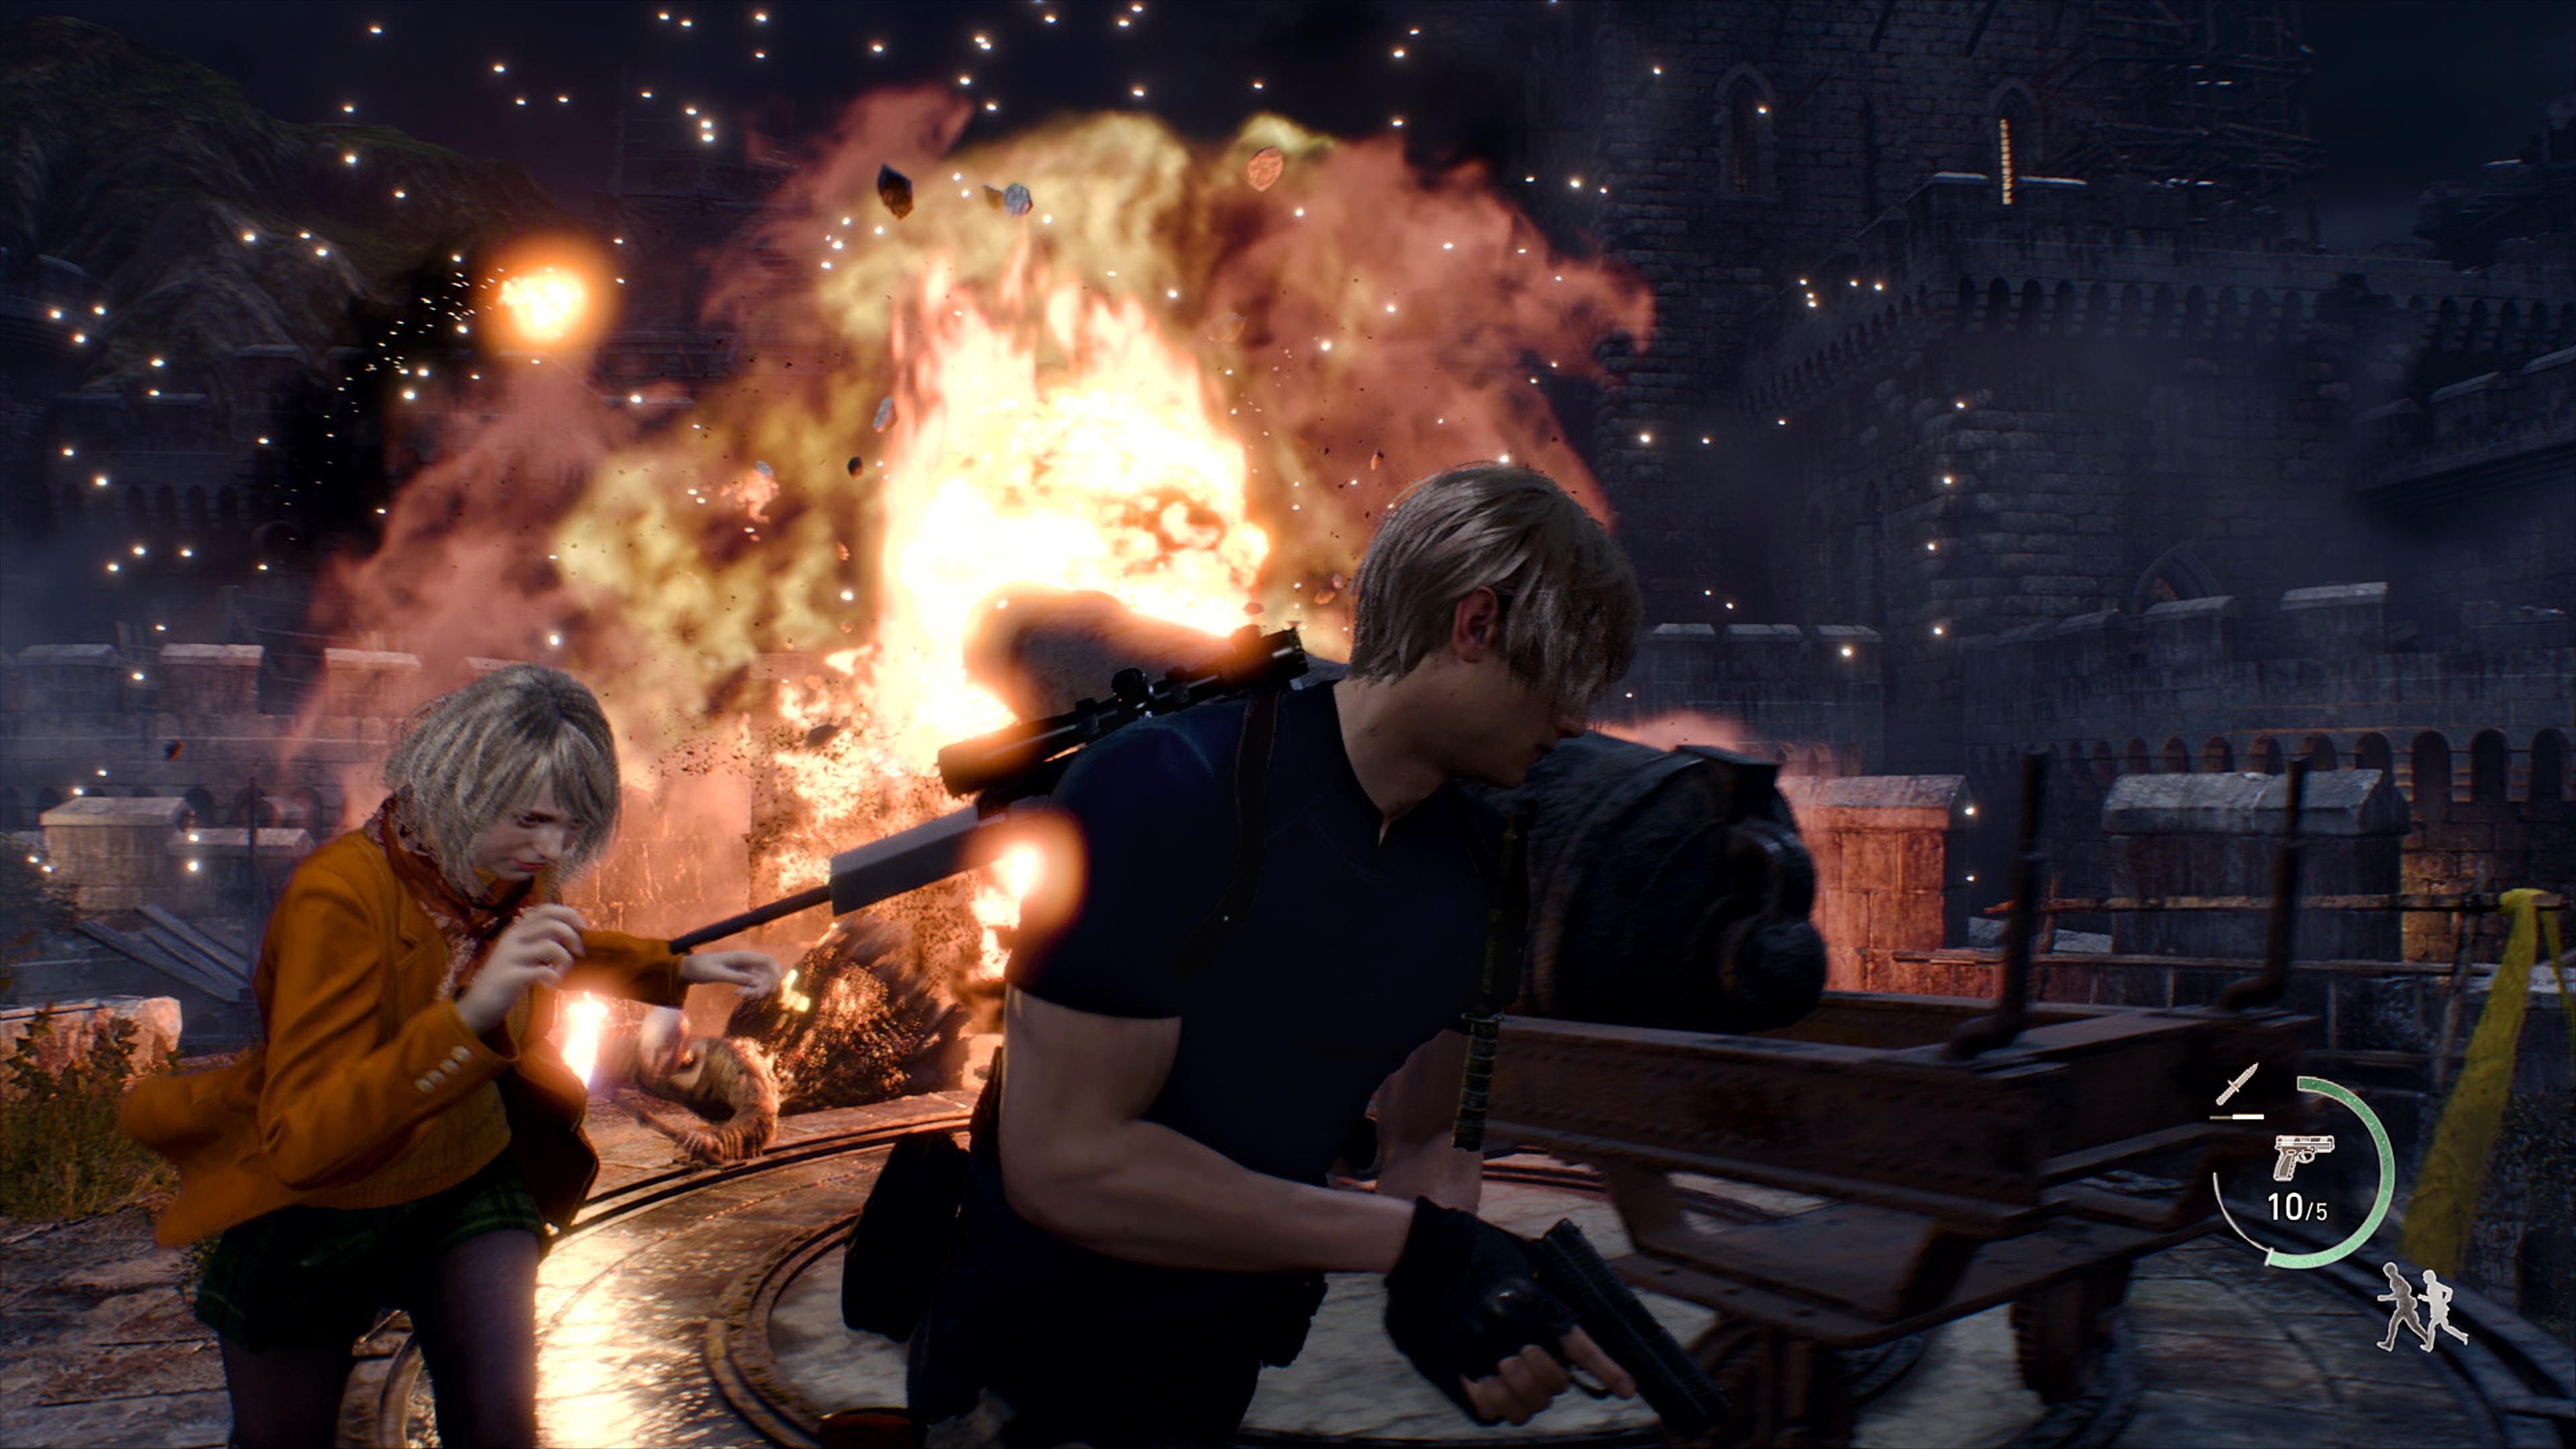 GameSpot on X: BREAKING: The #ResidentEvil4Remake just unveiled 5